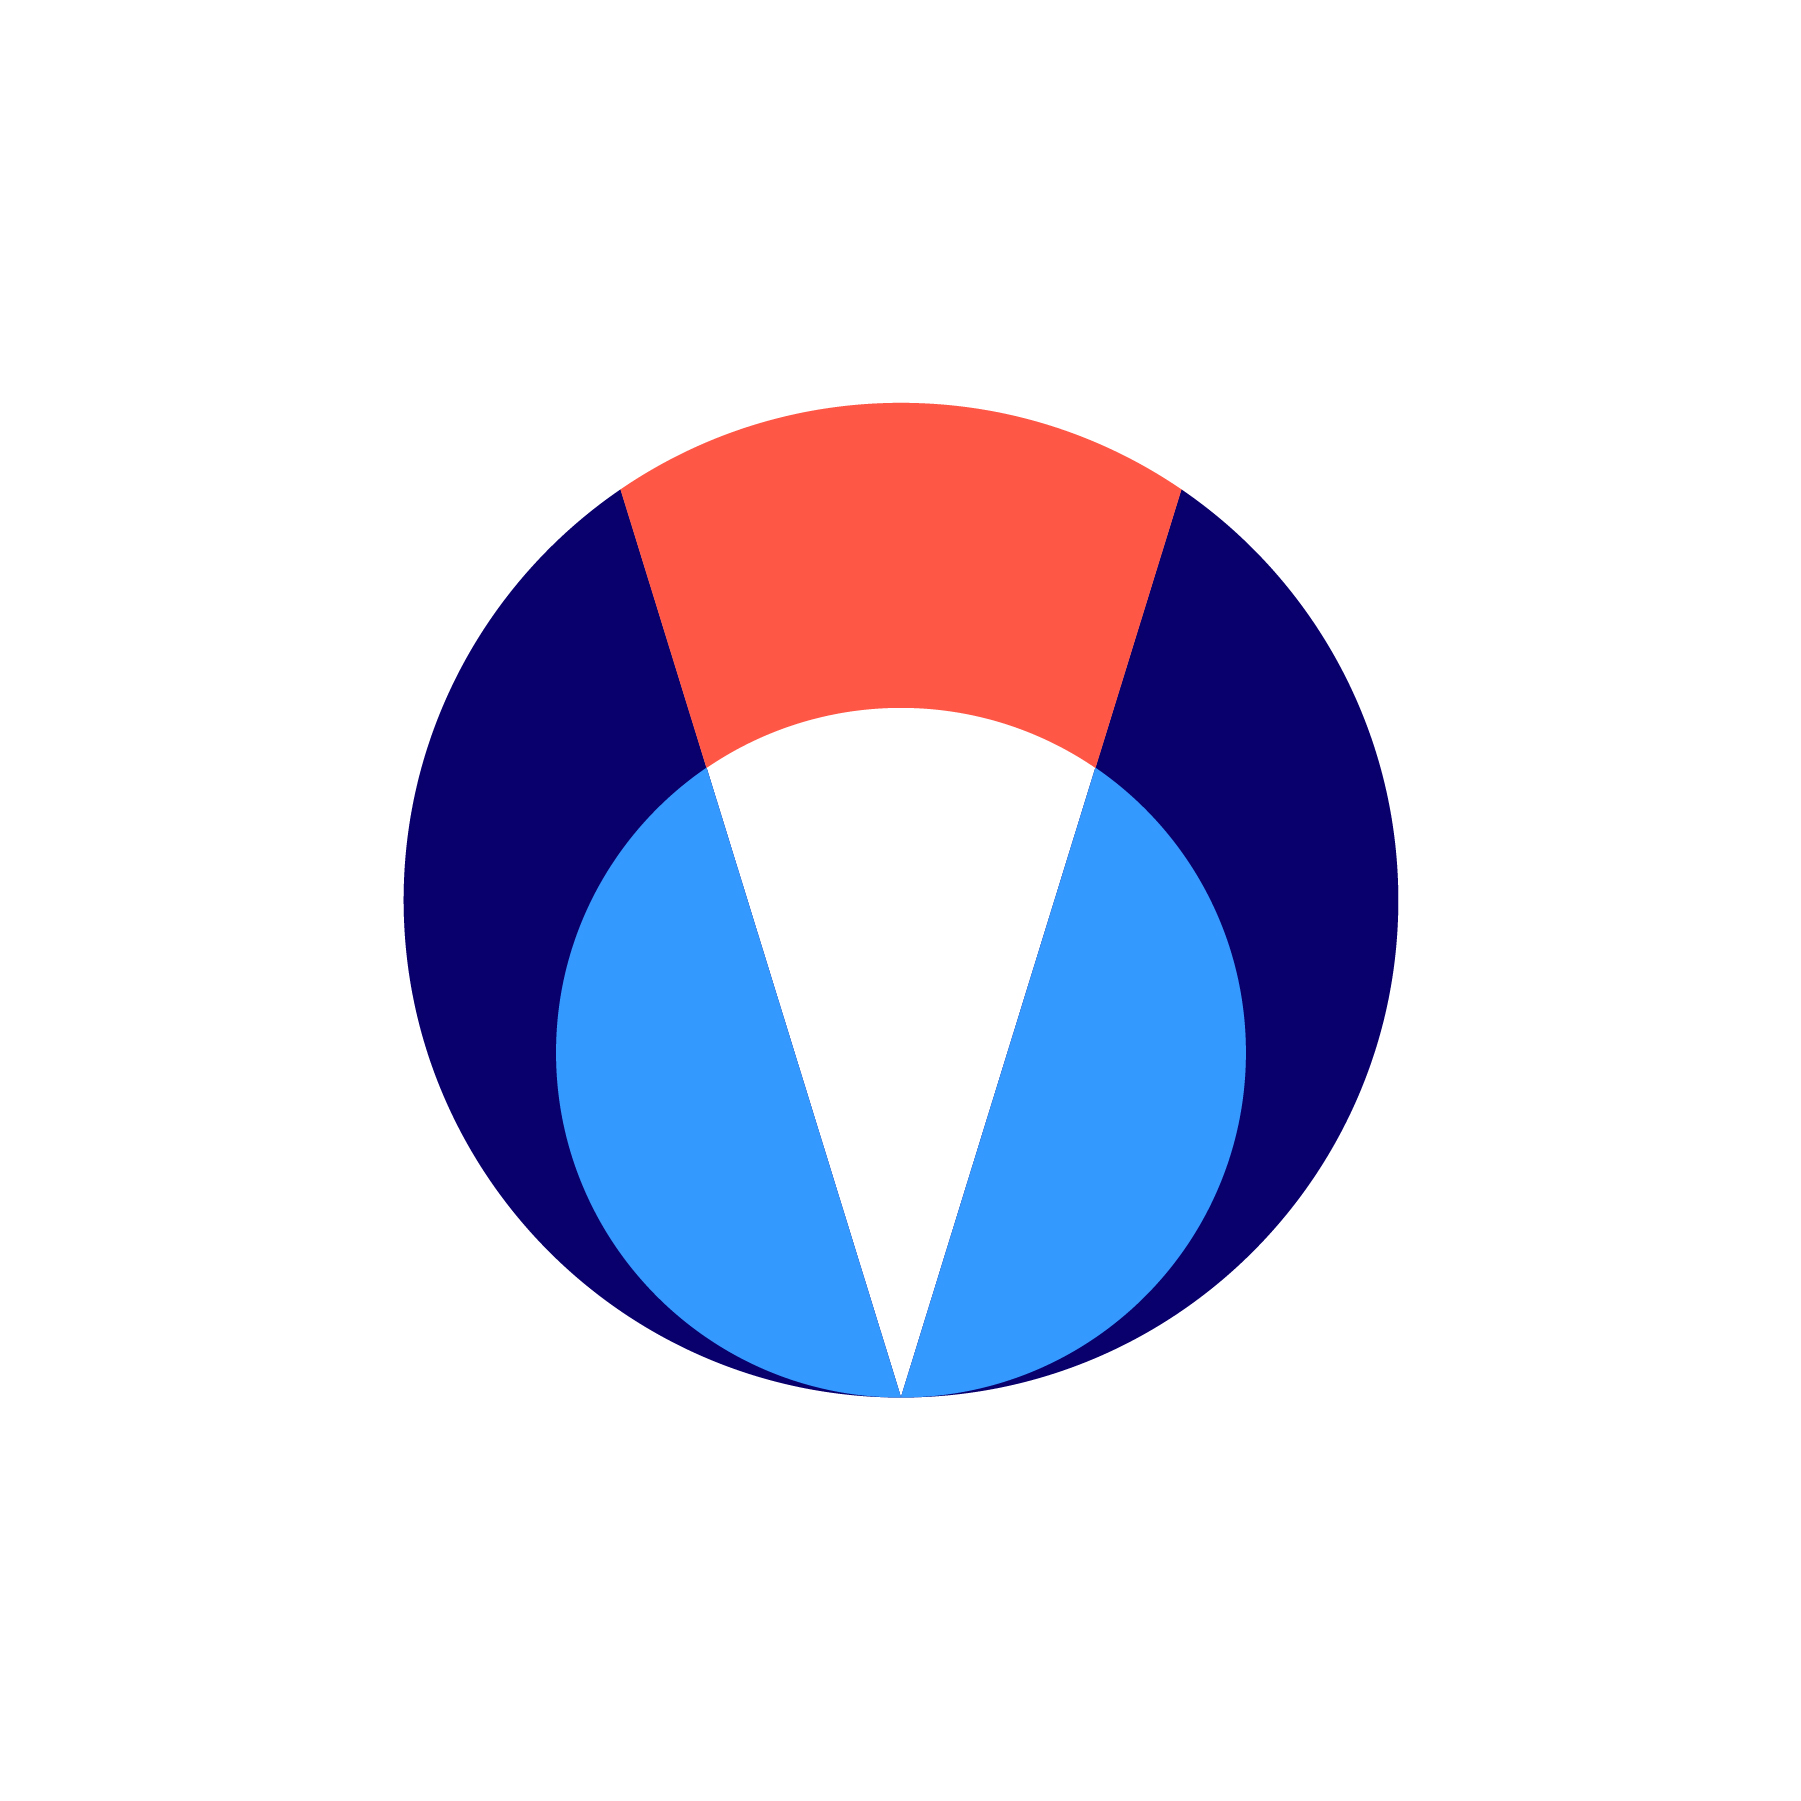 OptiViz logo design by logo designer Penda Design for your inspiration and for the worlds largest logo competition